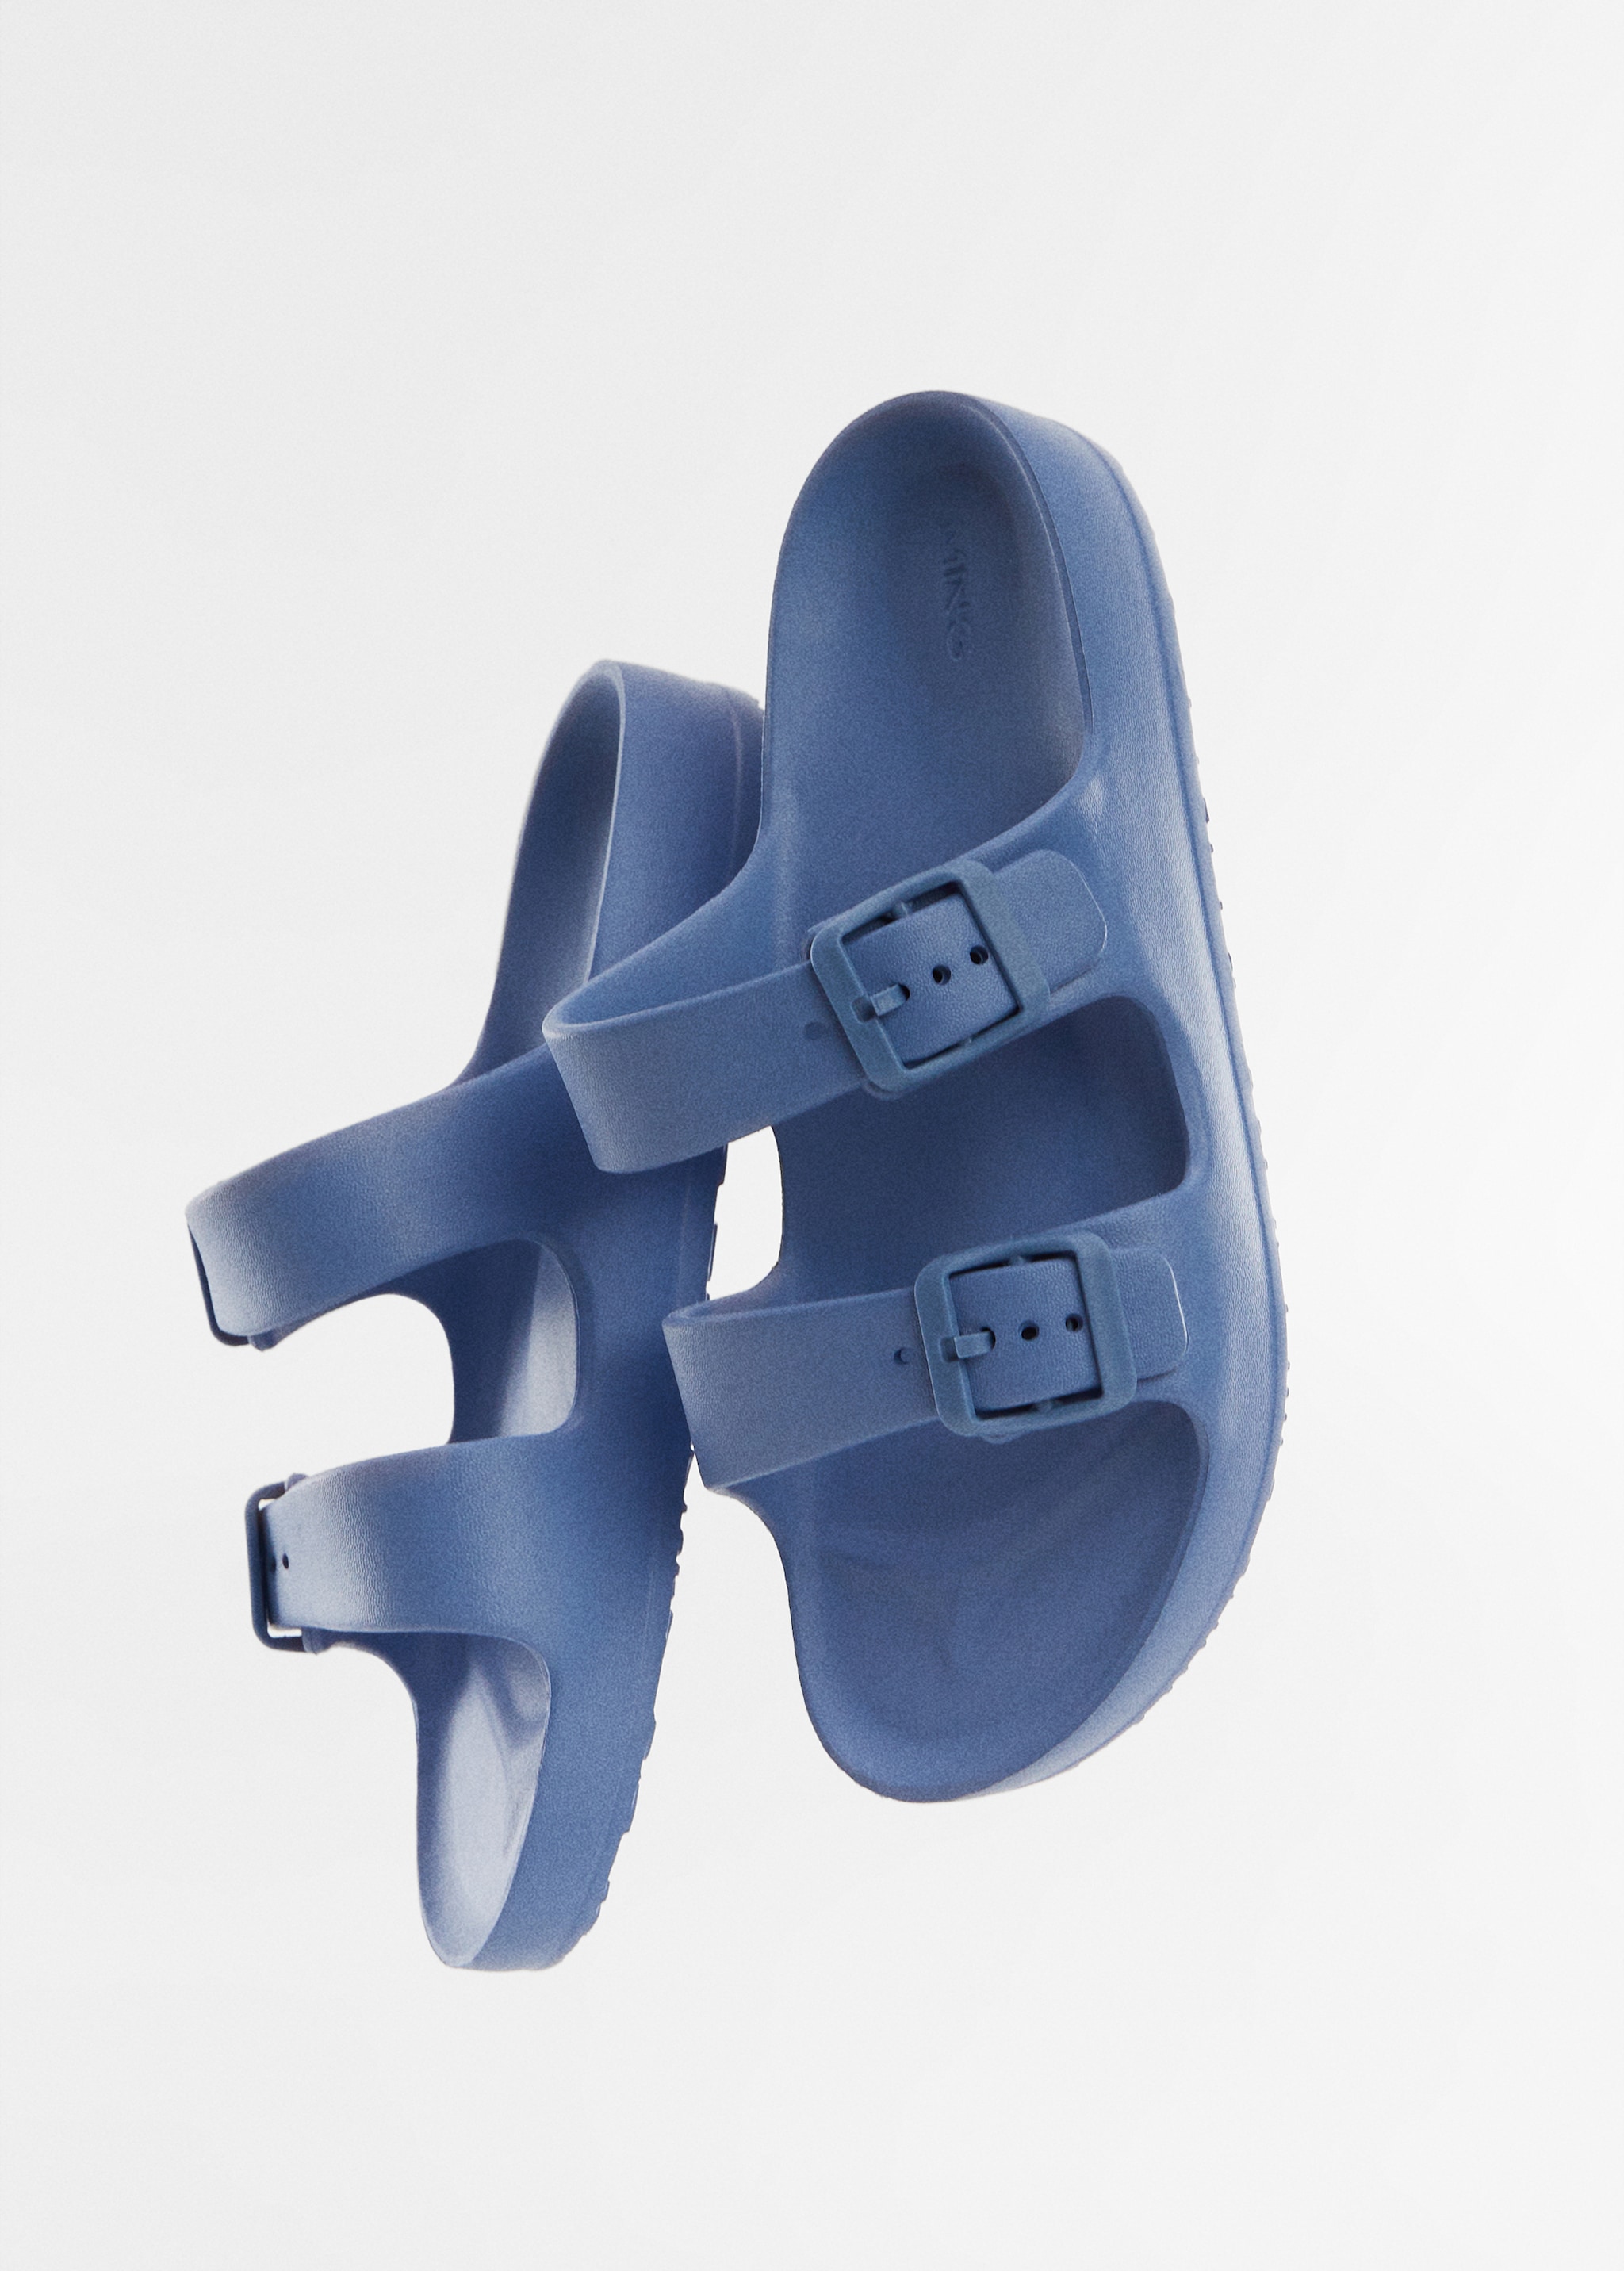 Flip flops buckles - Details of the article 5